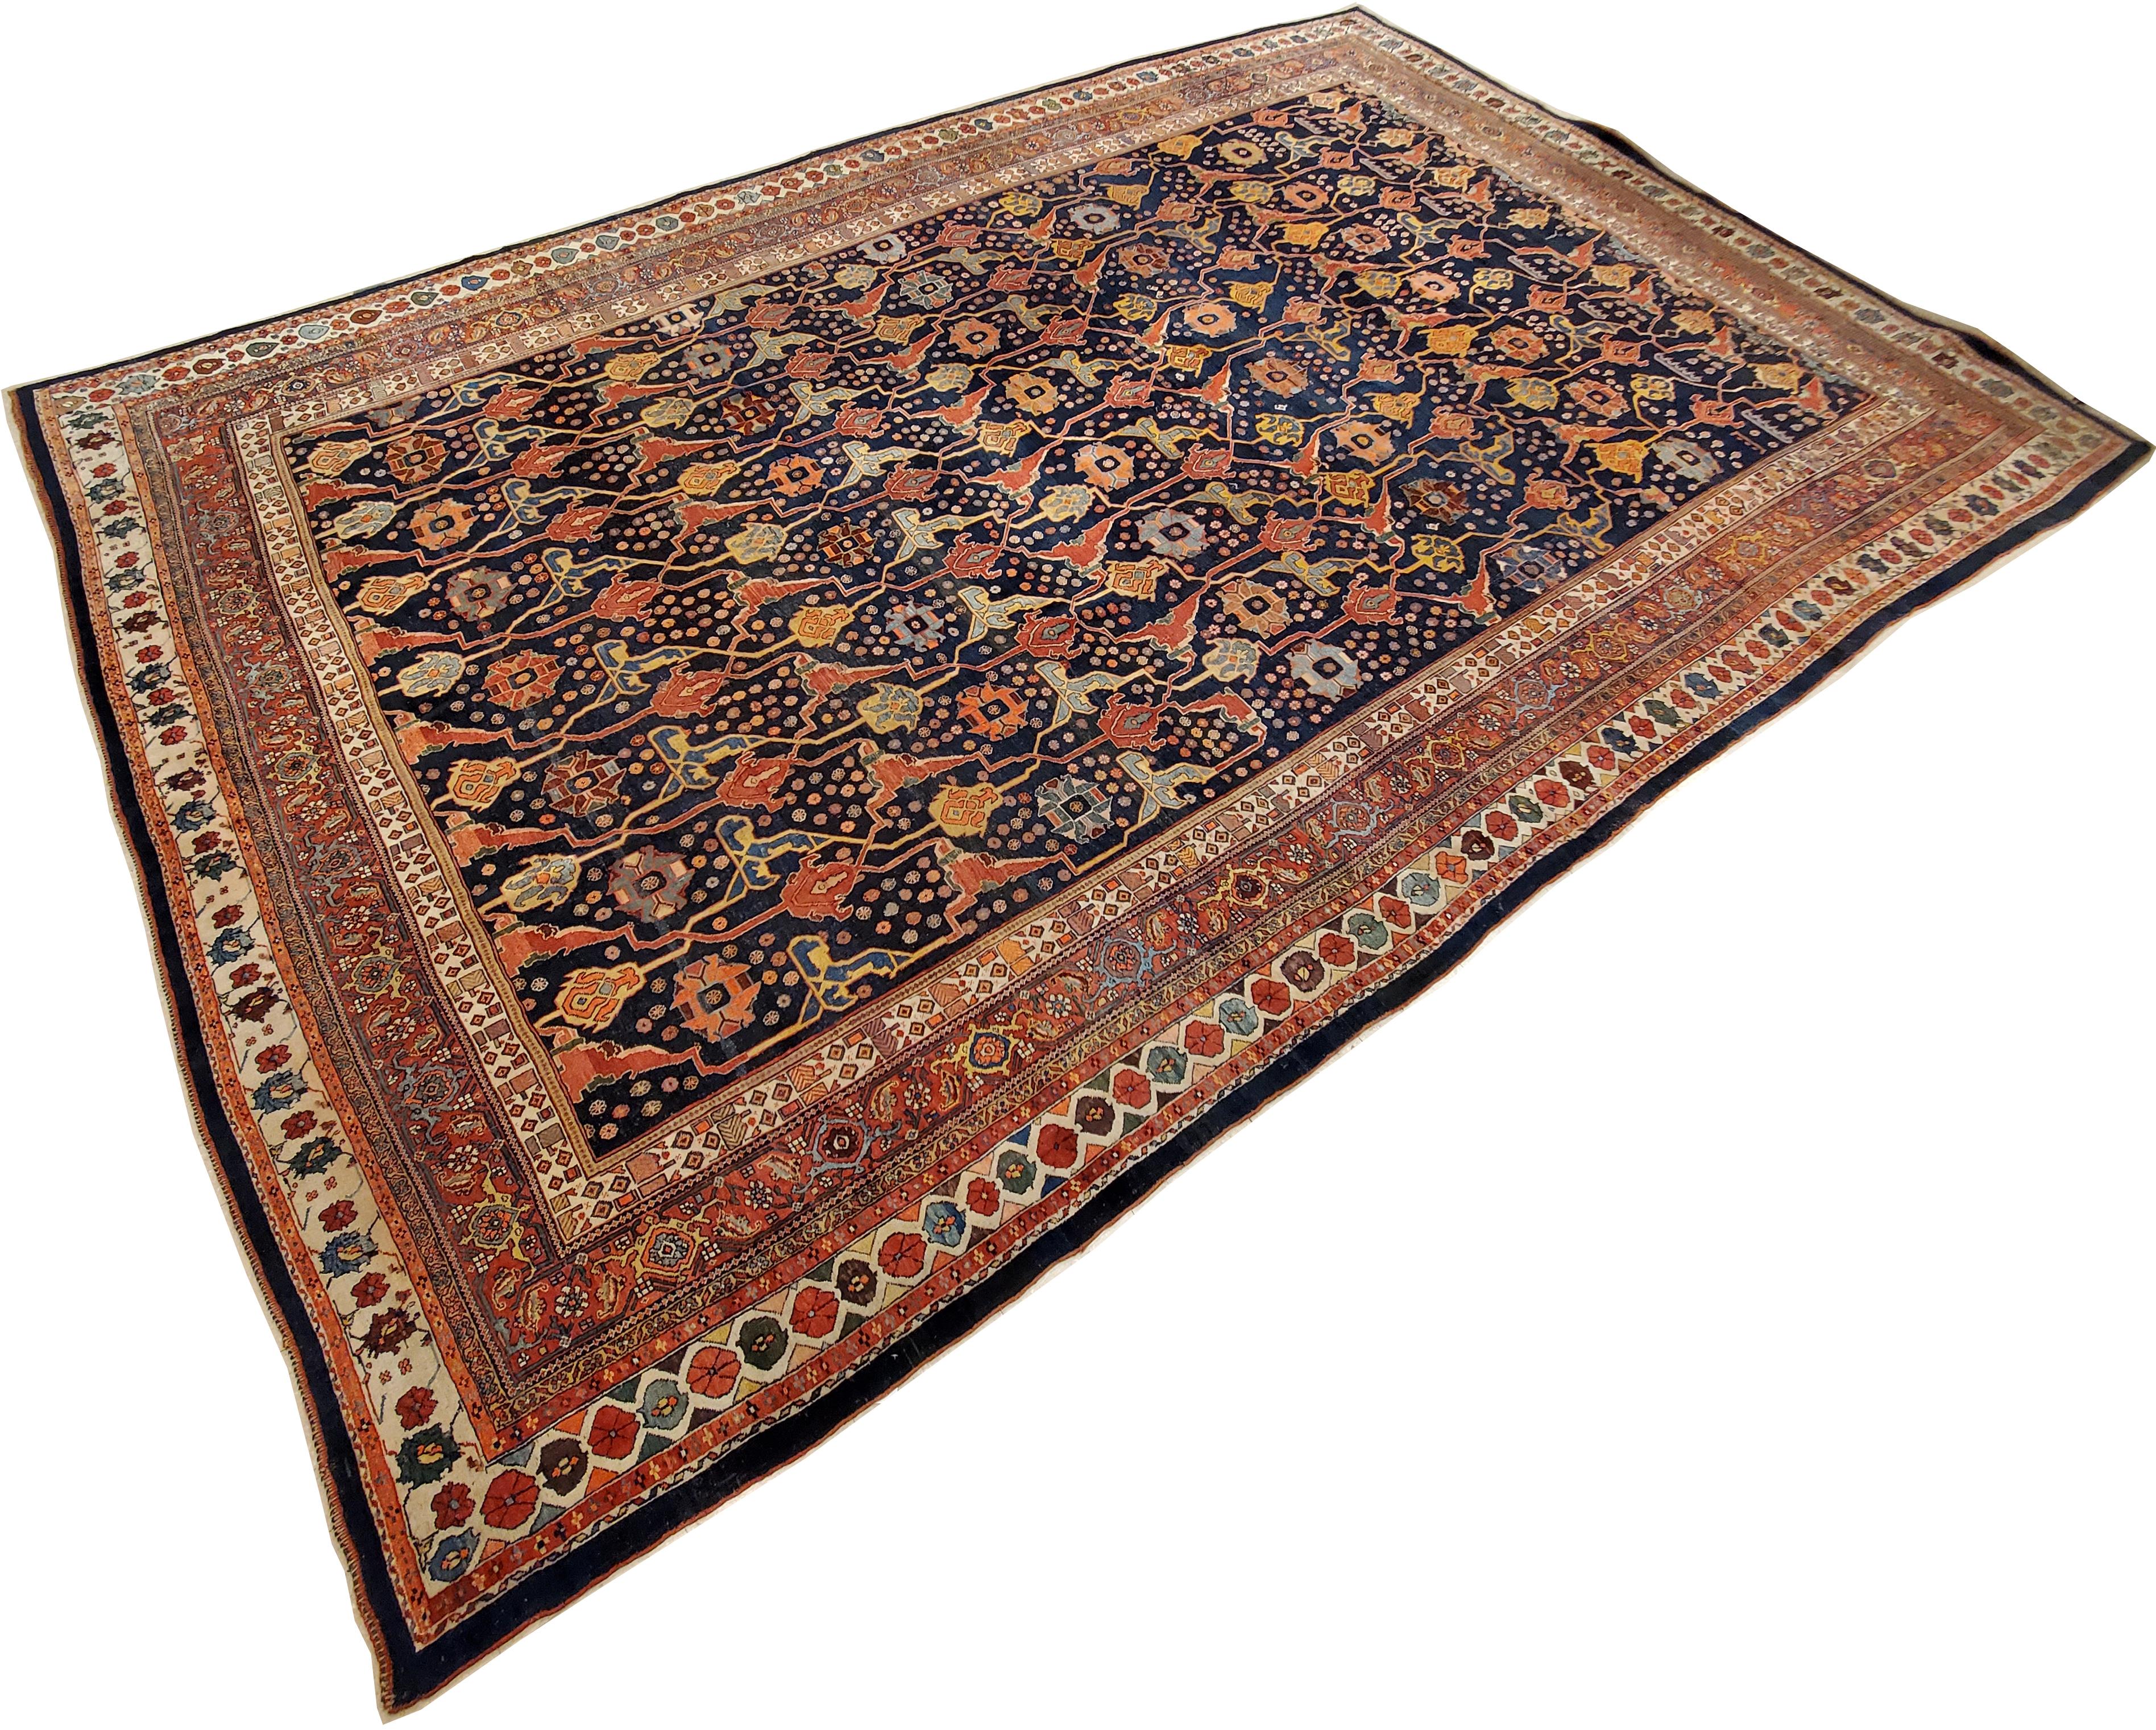 Wool Antique Bijar Carpet Oriental Carpet, Handmade, Navy, Red, Light Blue and Green For Sale